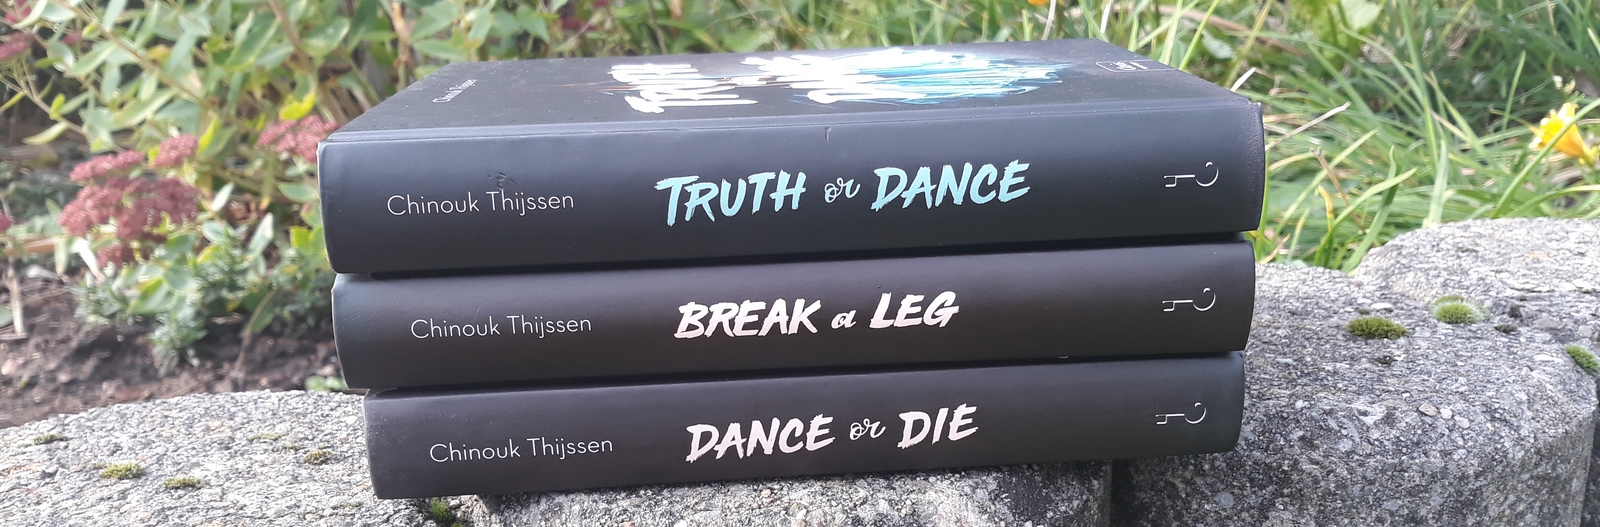 Truth or dance trilogie